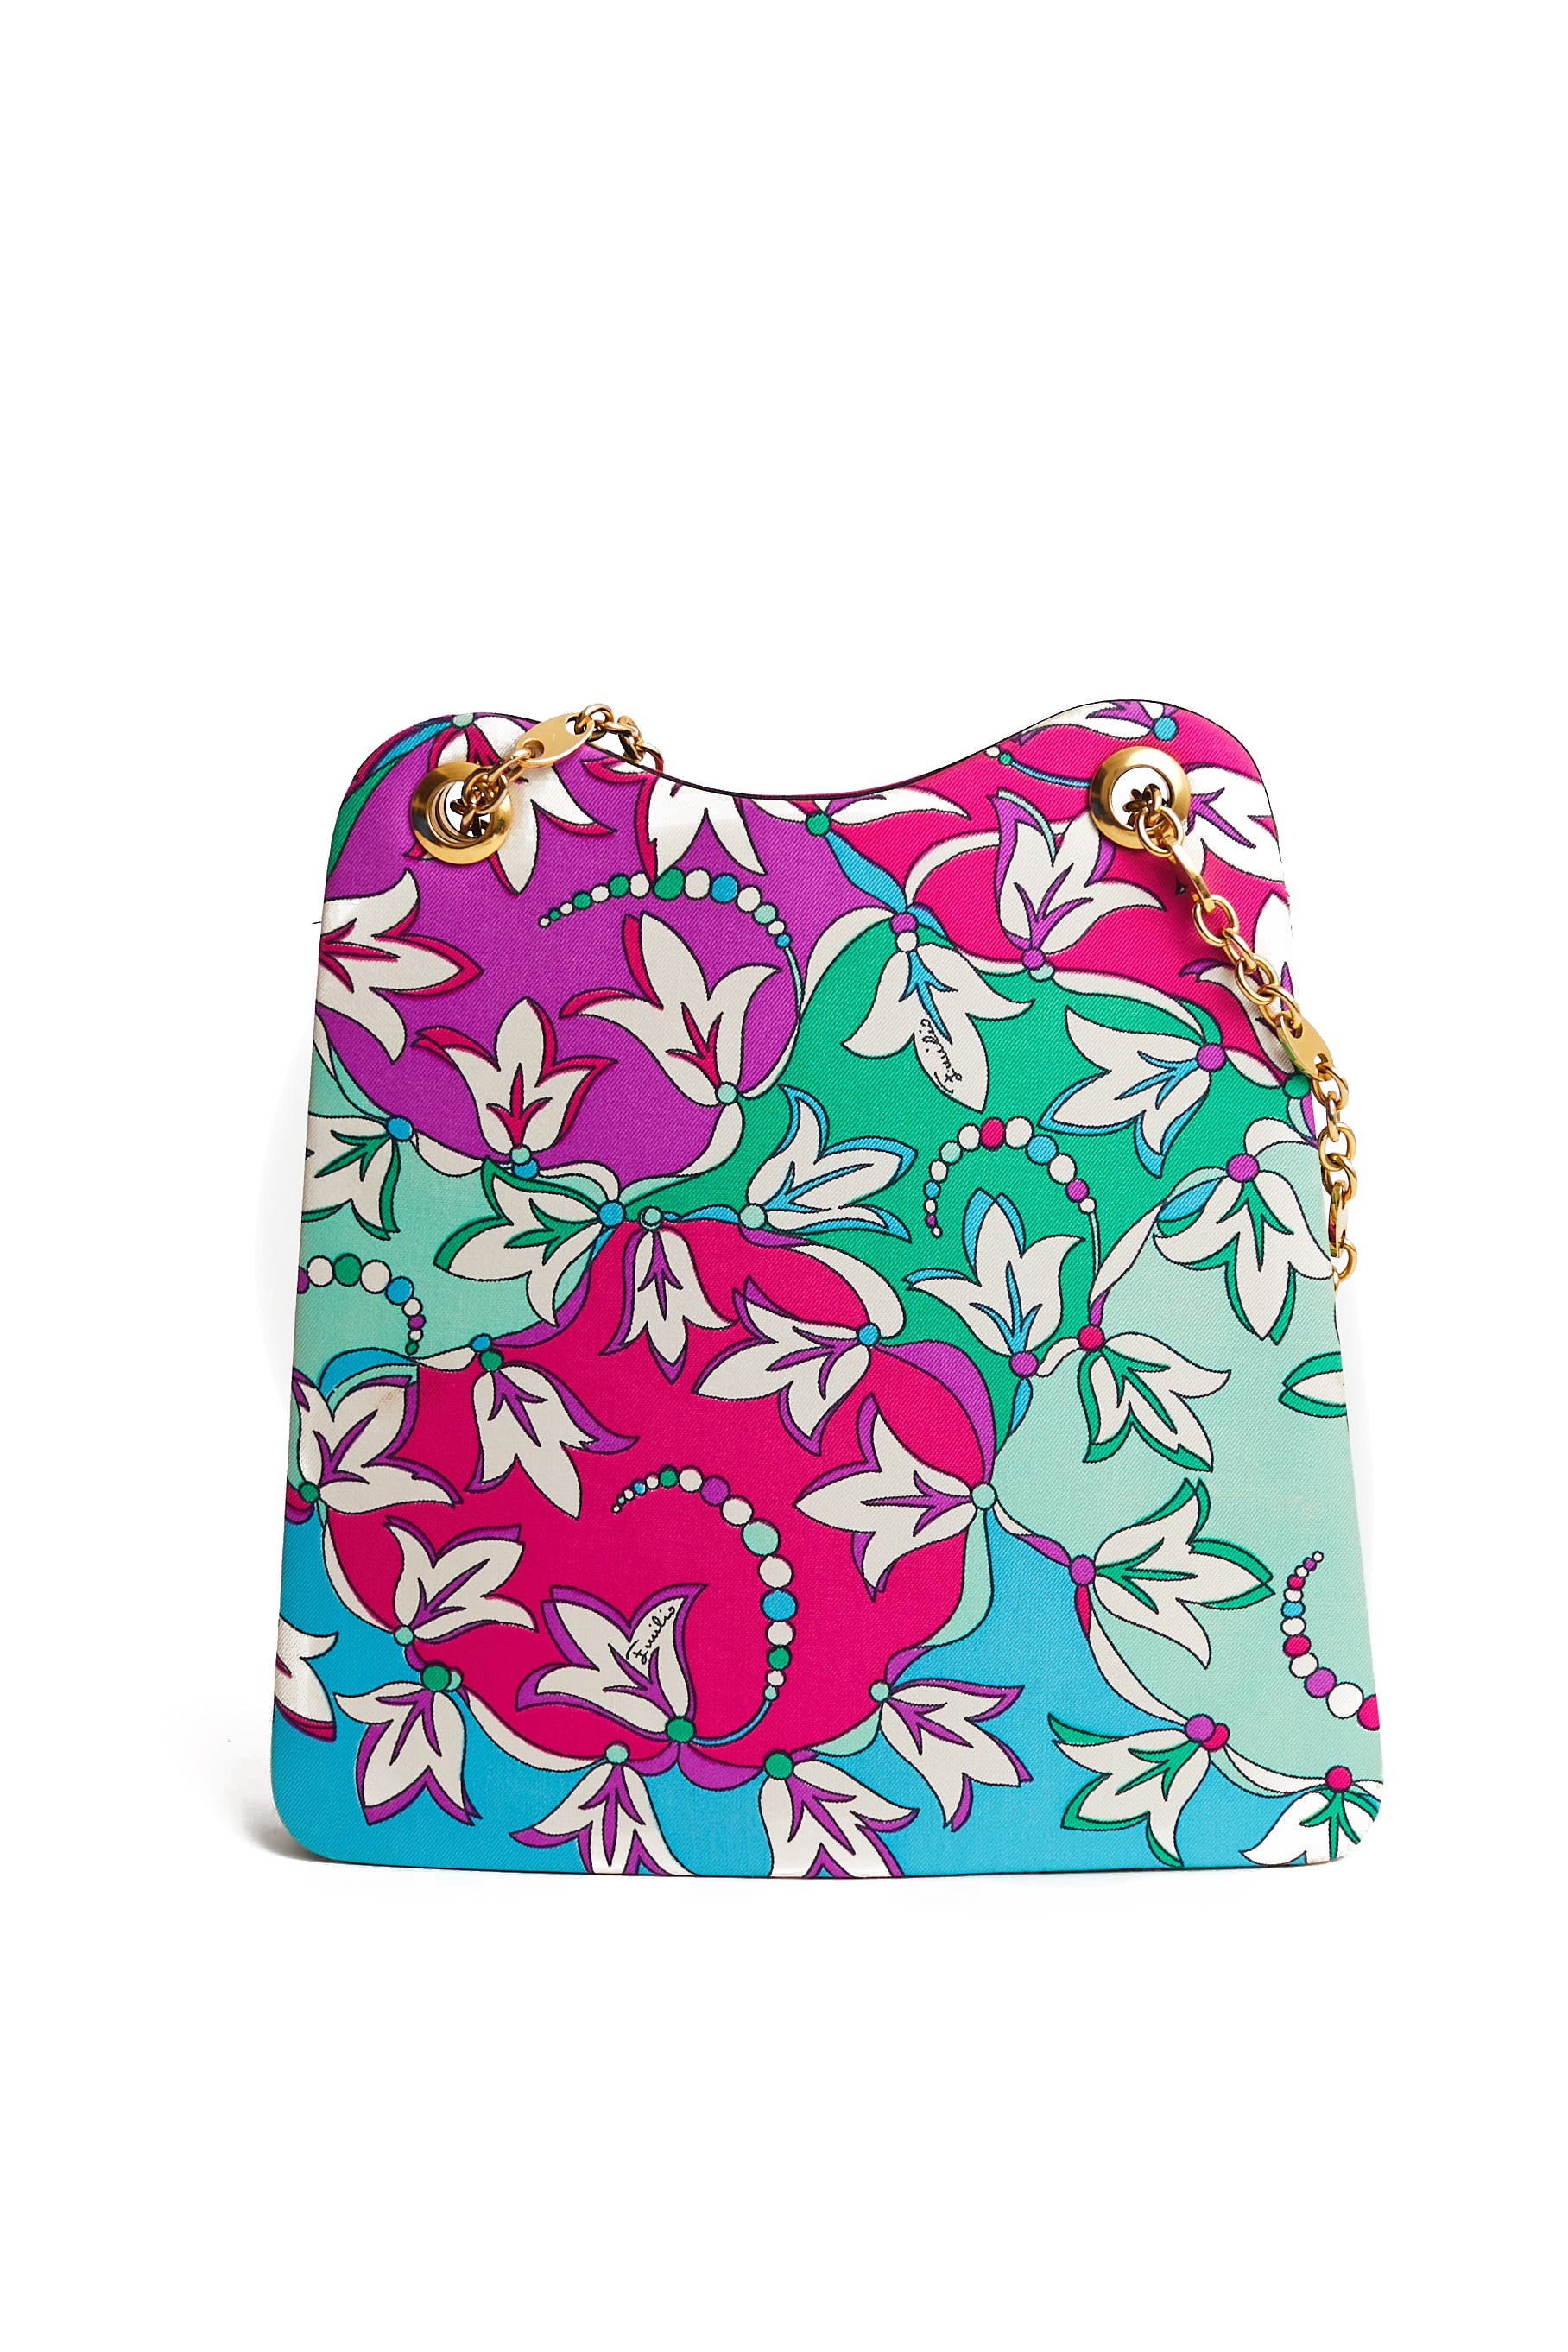 Emilio Pucci <br> 60's signed floral print silk chain strap bag